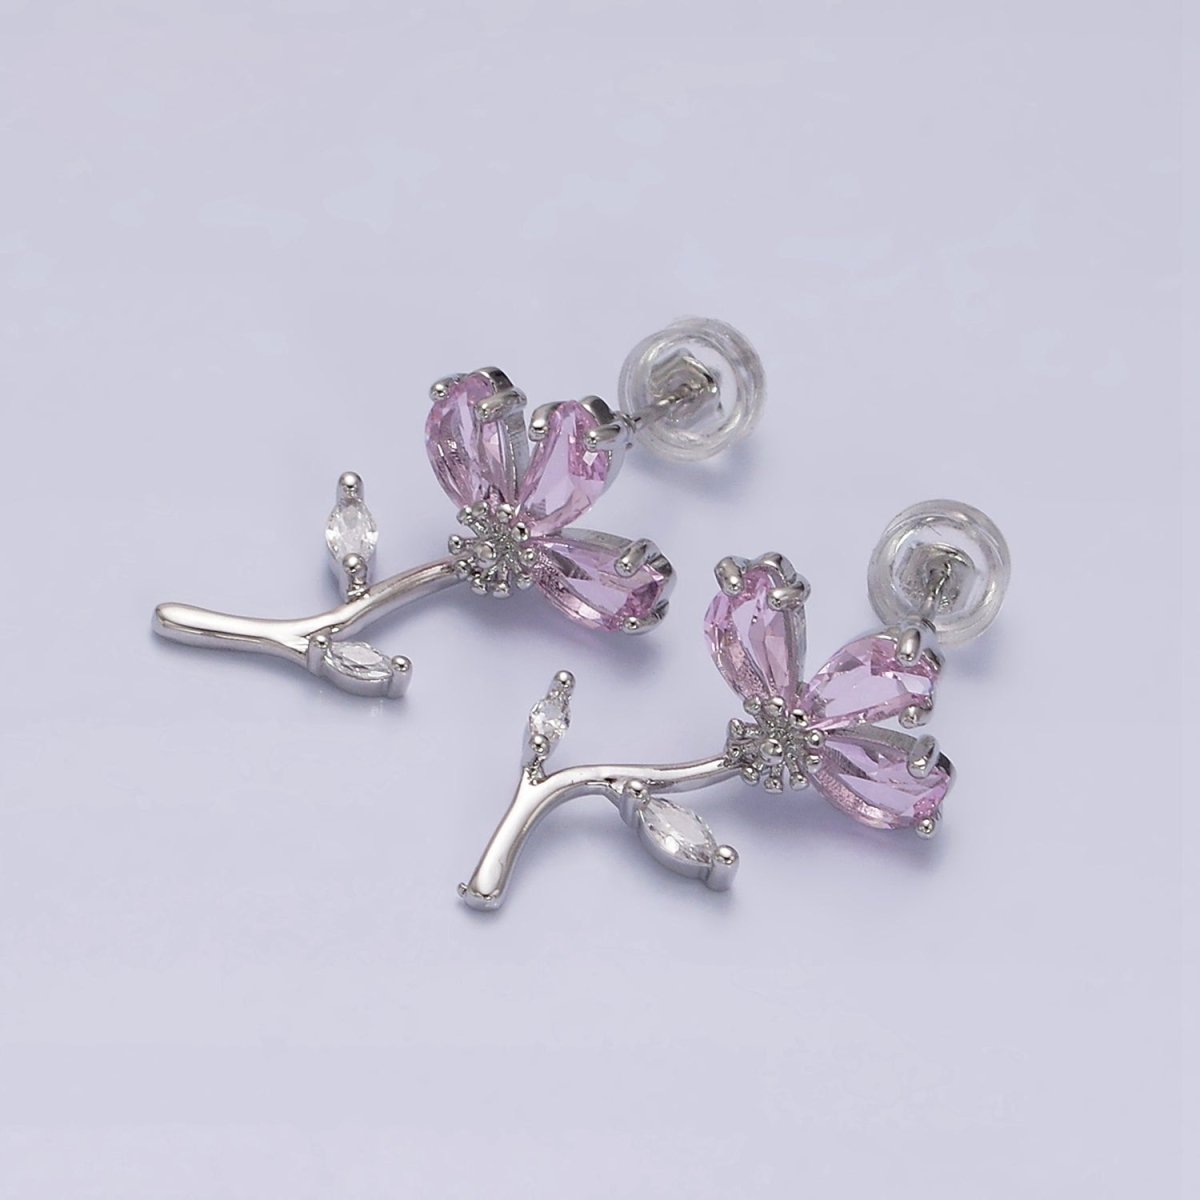 16K Gold Filled Pink Teardrop Flower Marquise Leaf Stud Earrings in Gold & Silver | AE840 AE841 - DLUXCA